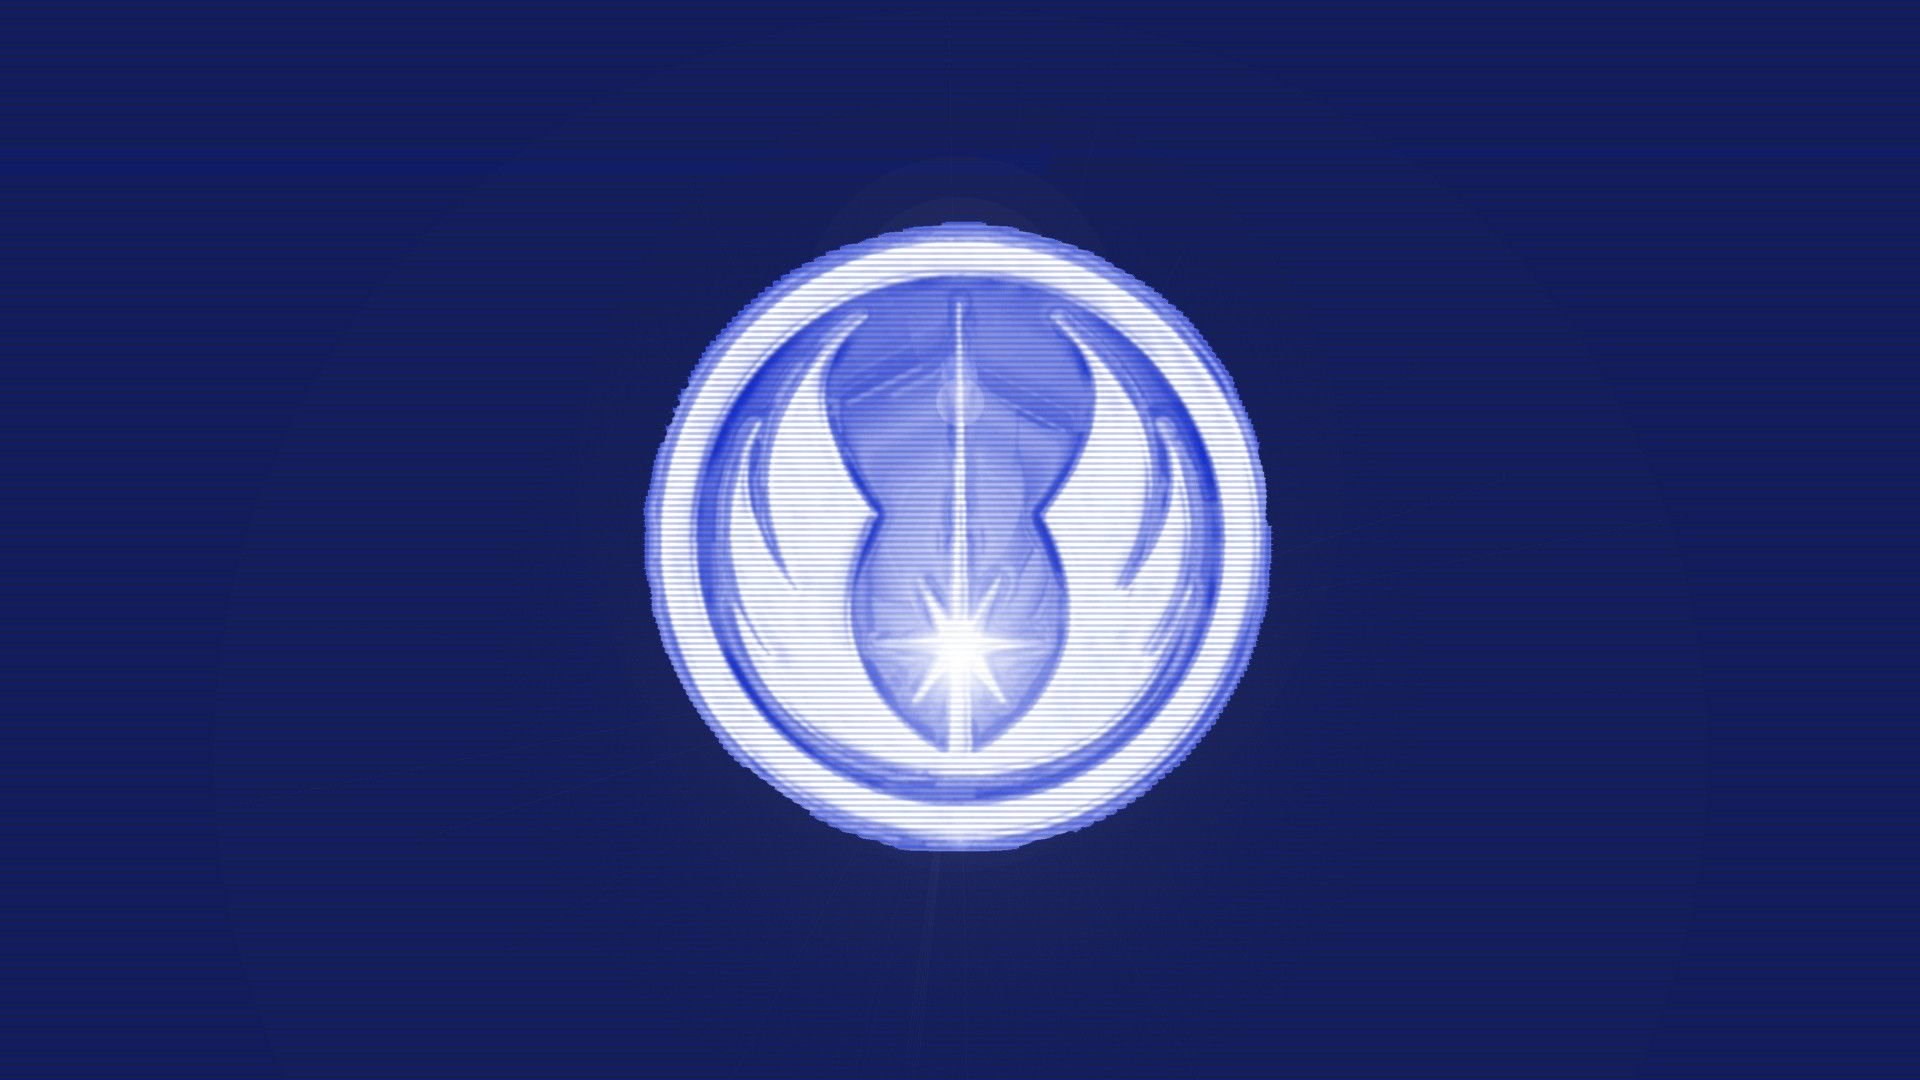 Jedi order symbol wallpaper